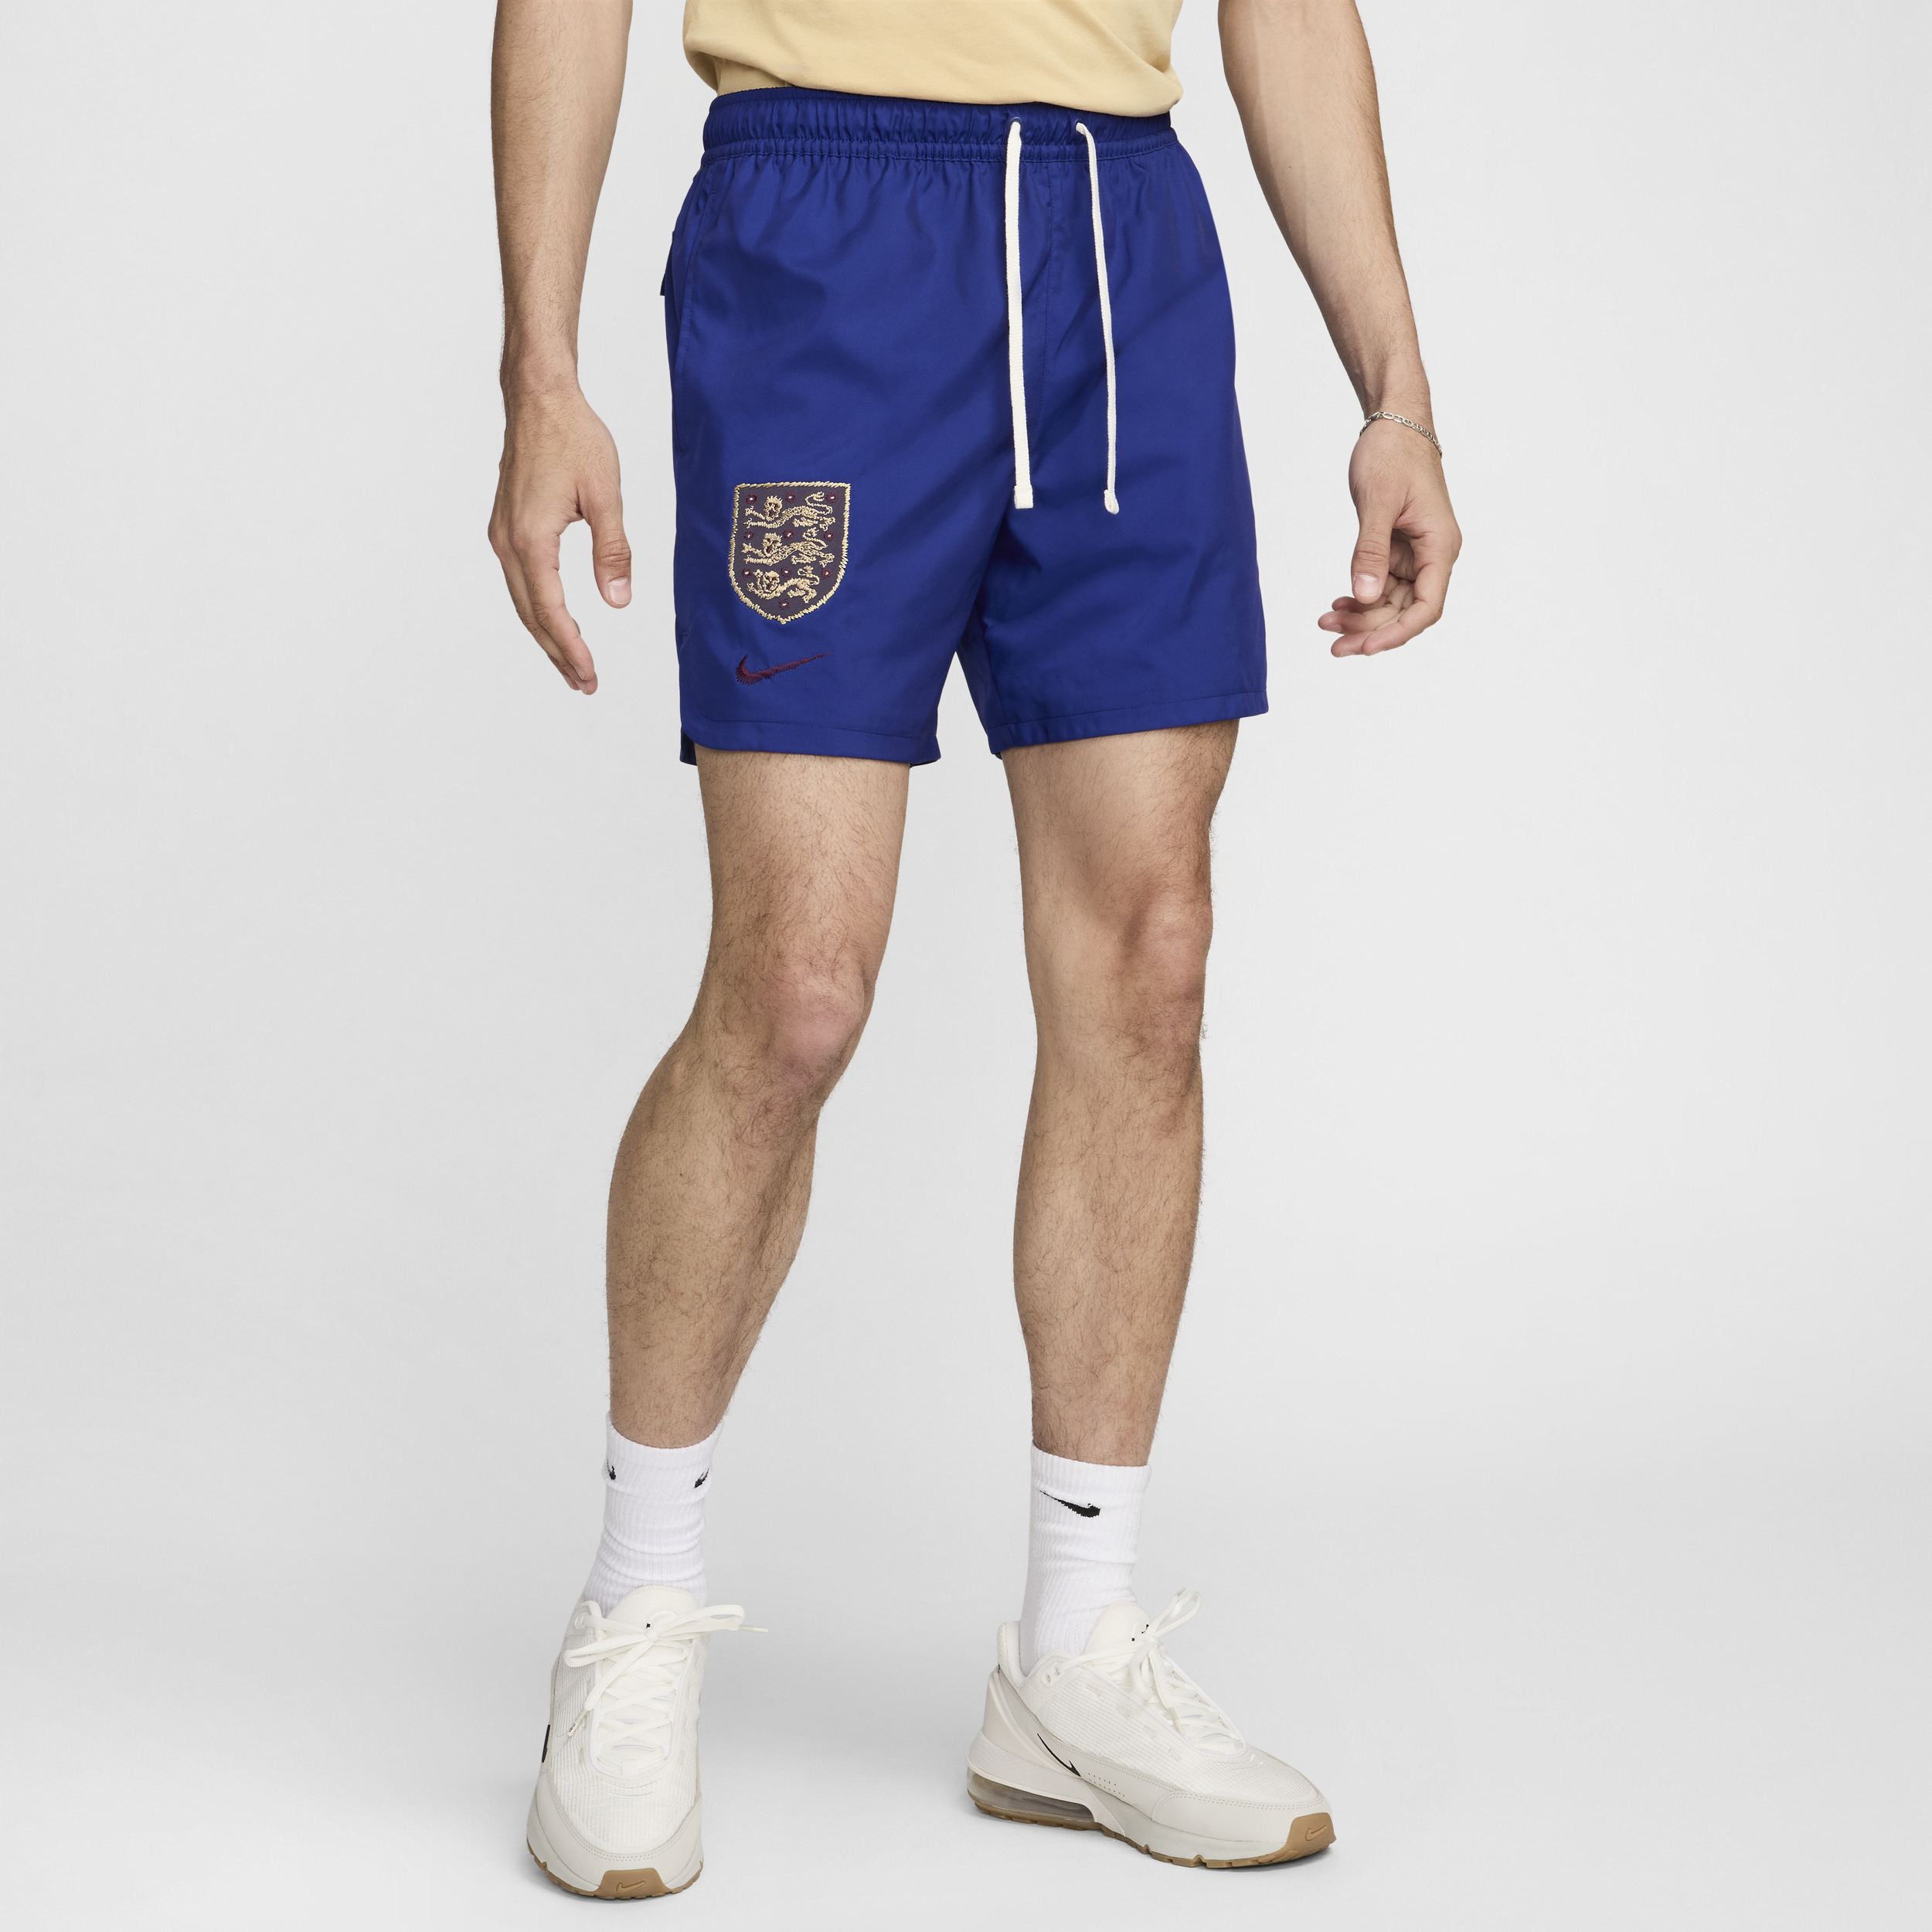 Shorts foderati in tessuto Nike Football Inghilterra Sport Essential Flow – Uomo - Blu